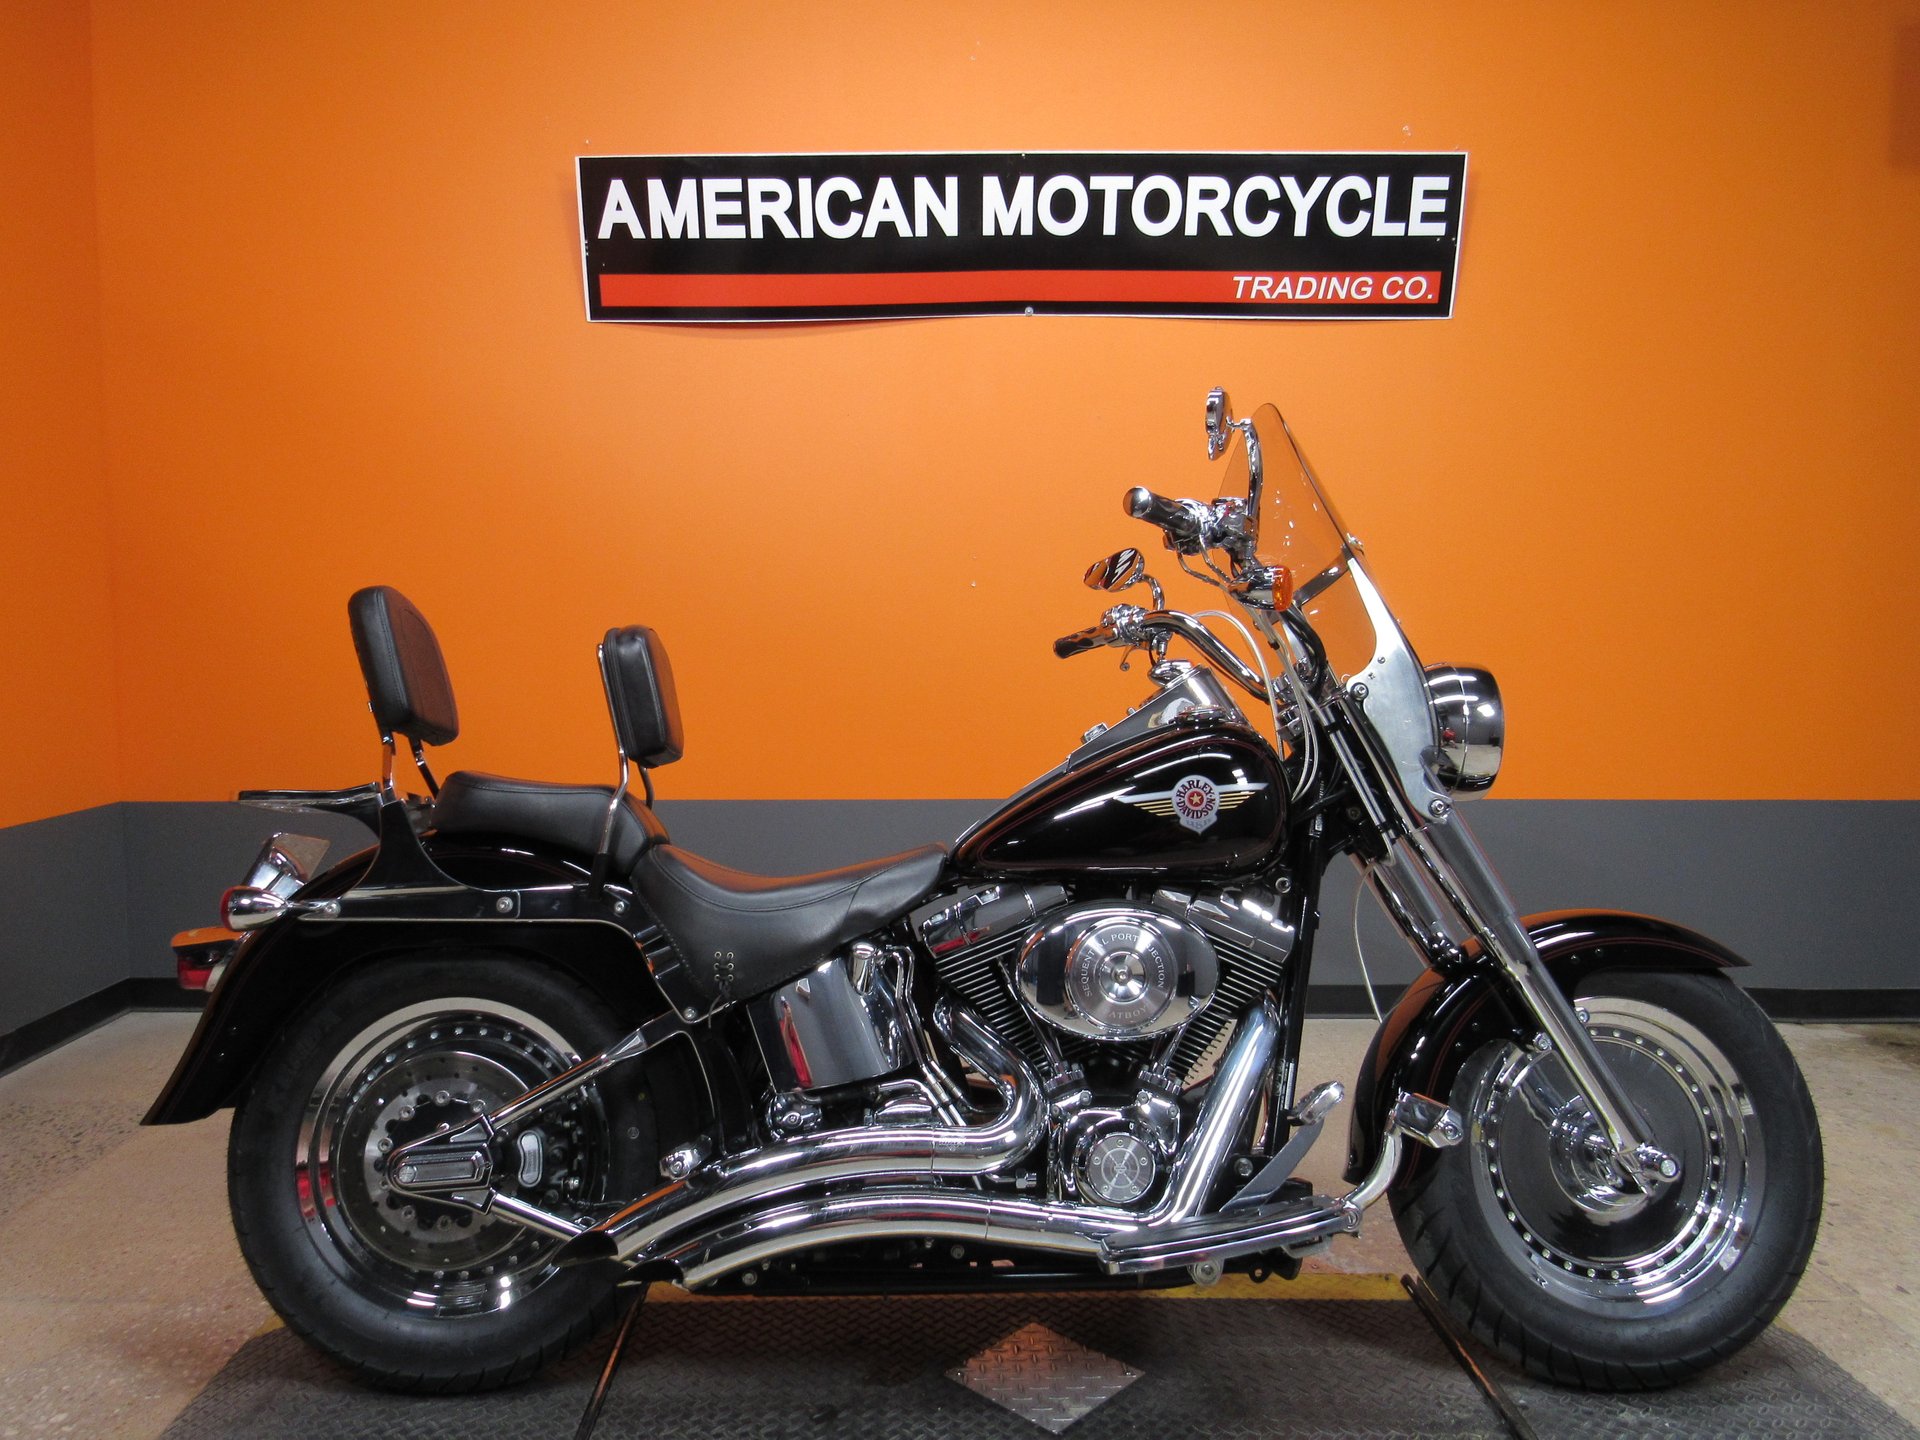 2002 Harley Davidson Softail Fat Boy American Motorcycle Trading Company Used Harley Davidson Motorcycles